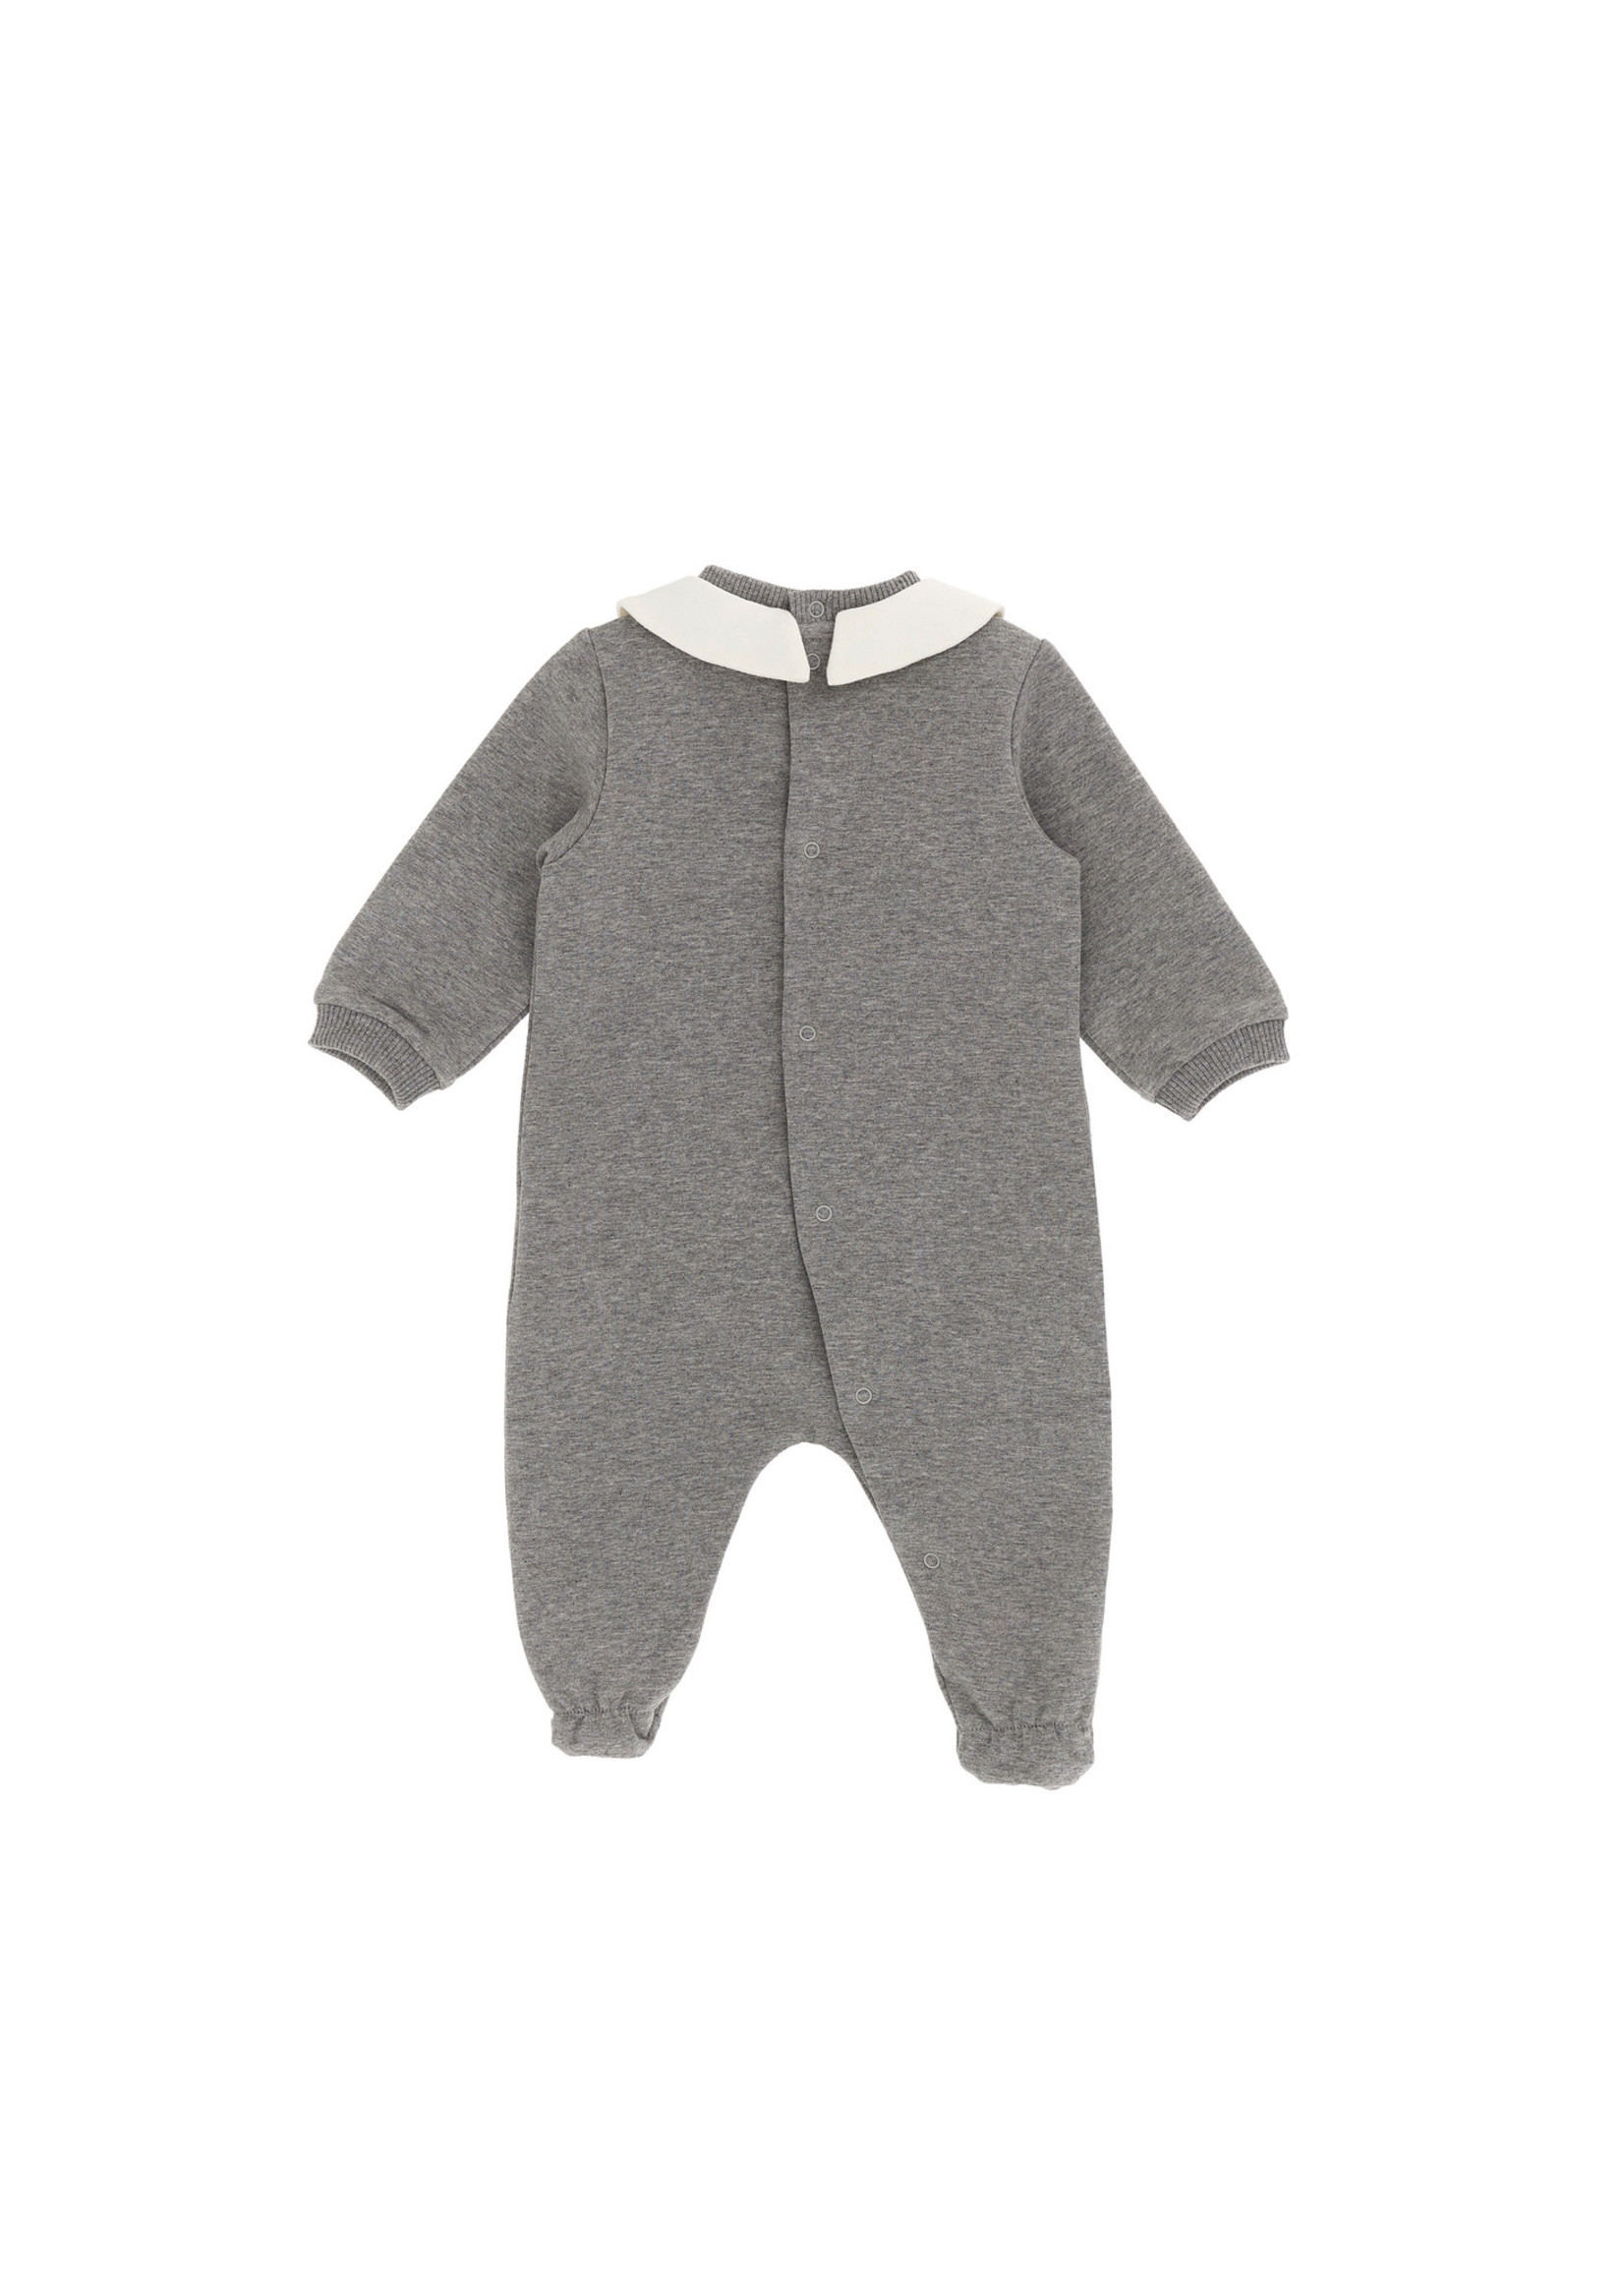 Moschino Moschino Baby Giftset playwear grey toy - MMY02Z